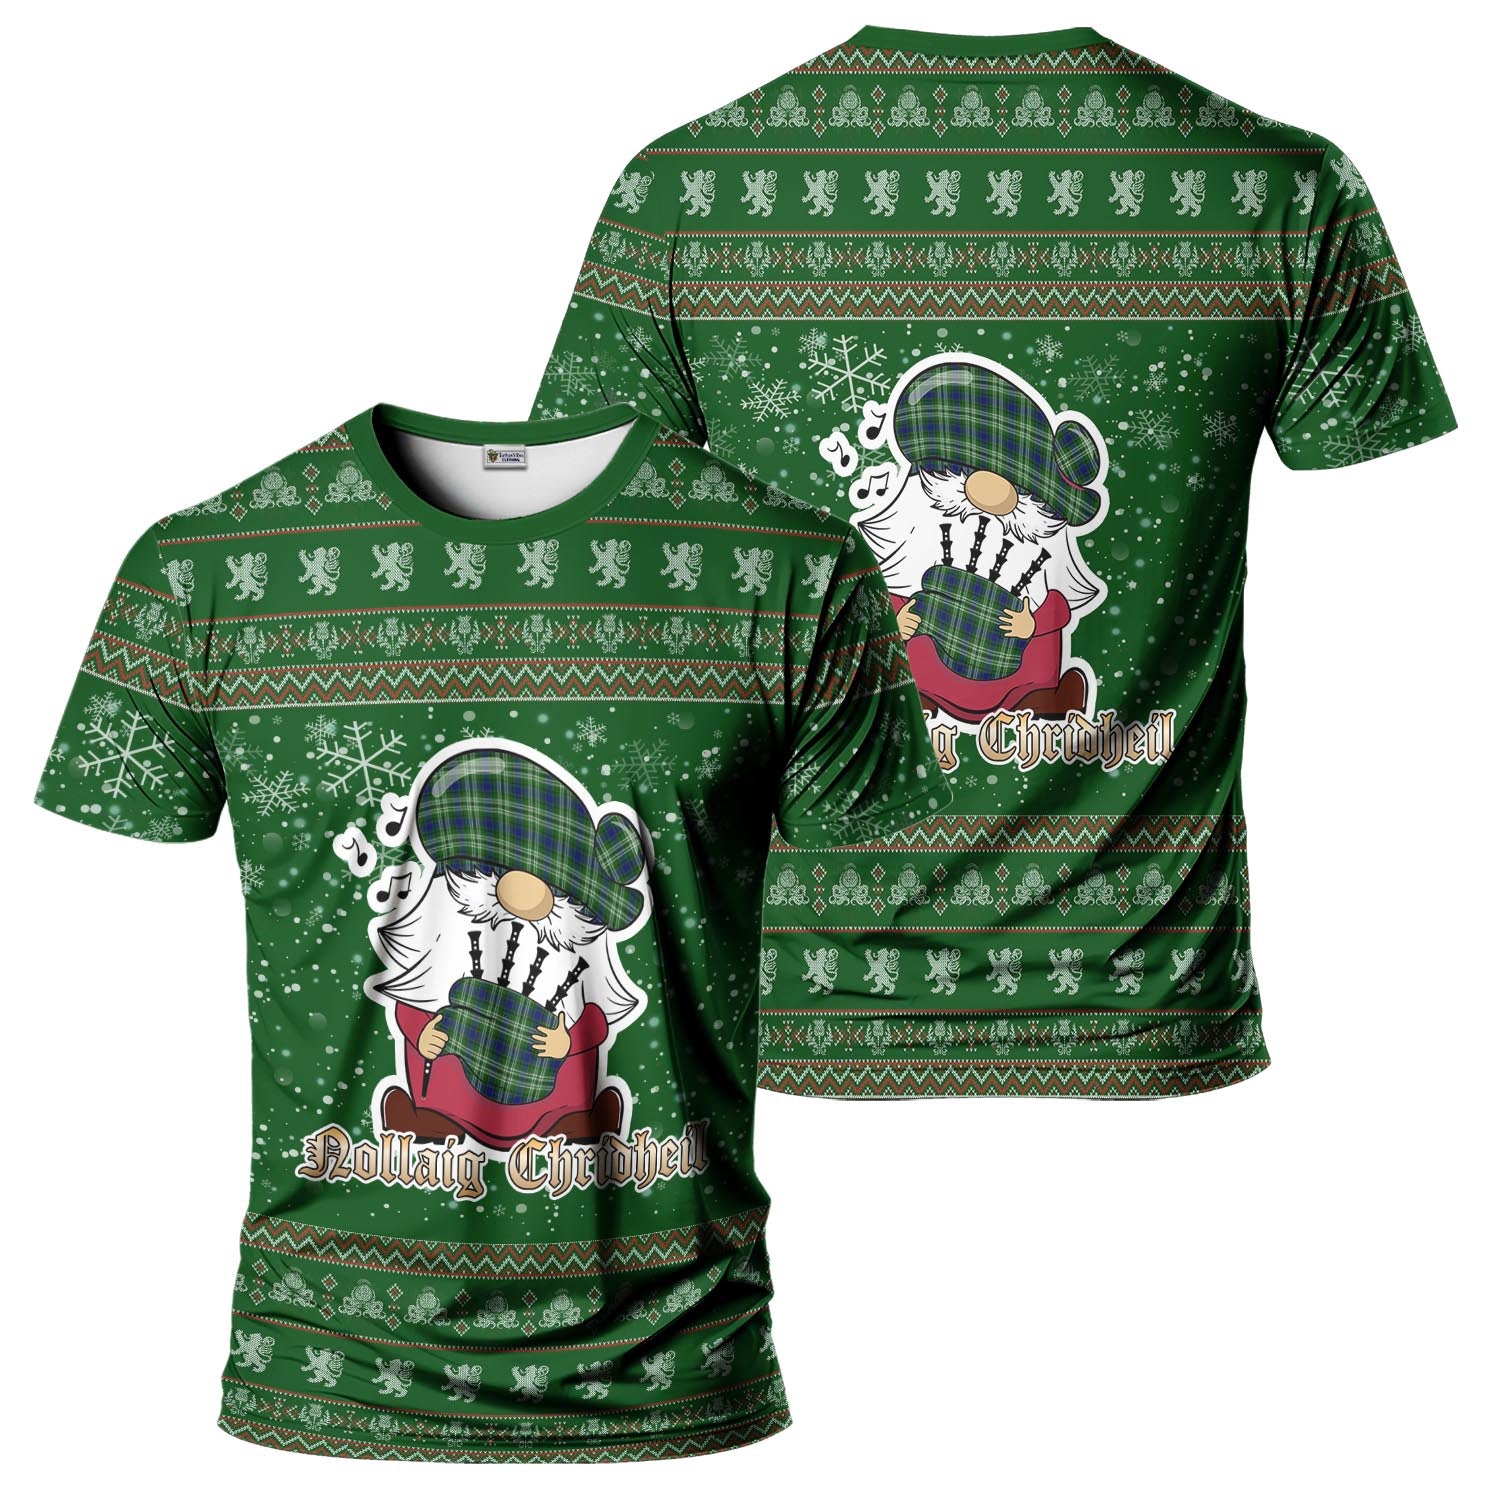 Haliburton Clan Christmas Family T-Shirt with Funny Gnome Playing Bagpipes Men's Shirt Green - Tartanvibesclothing